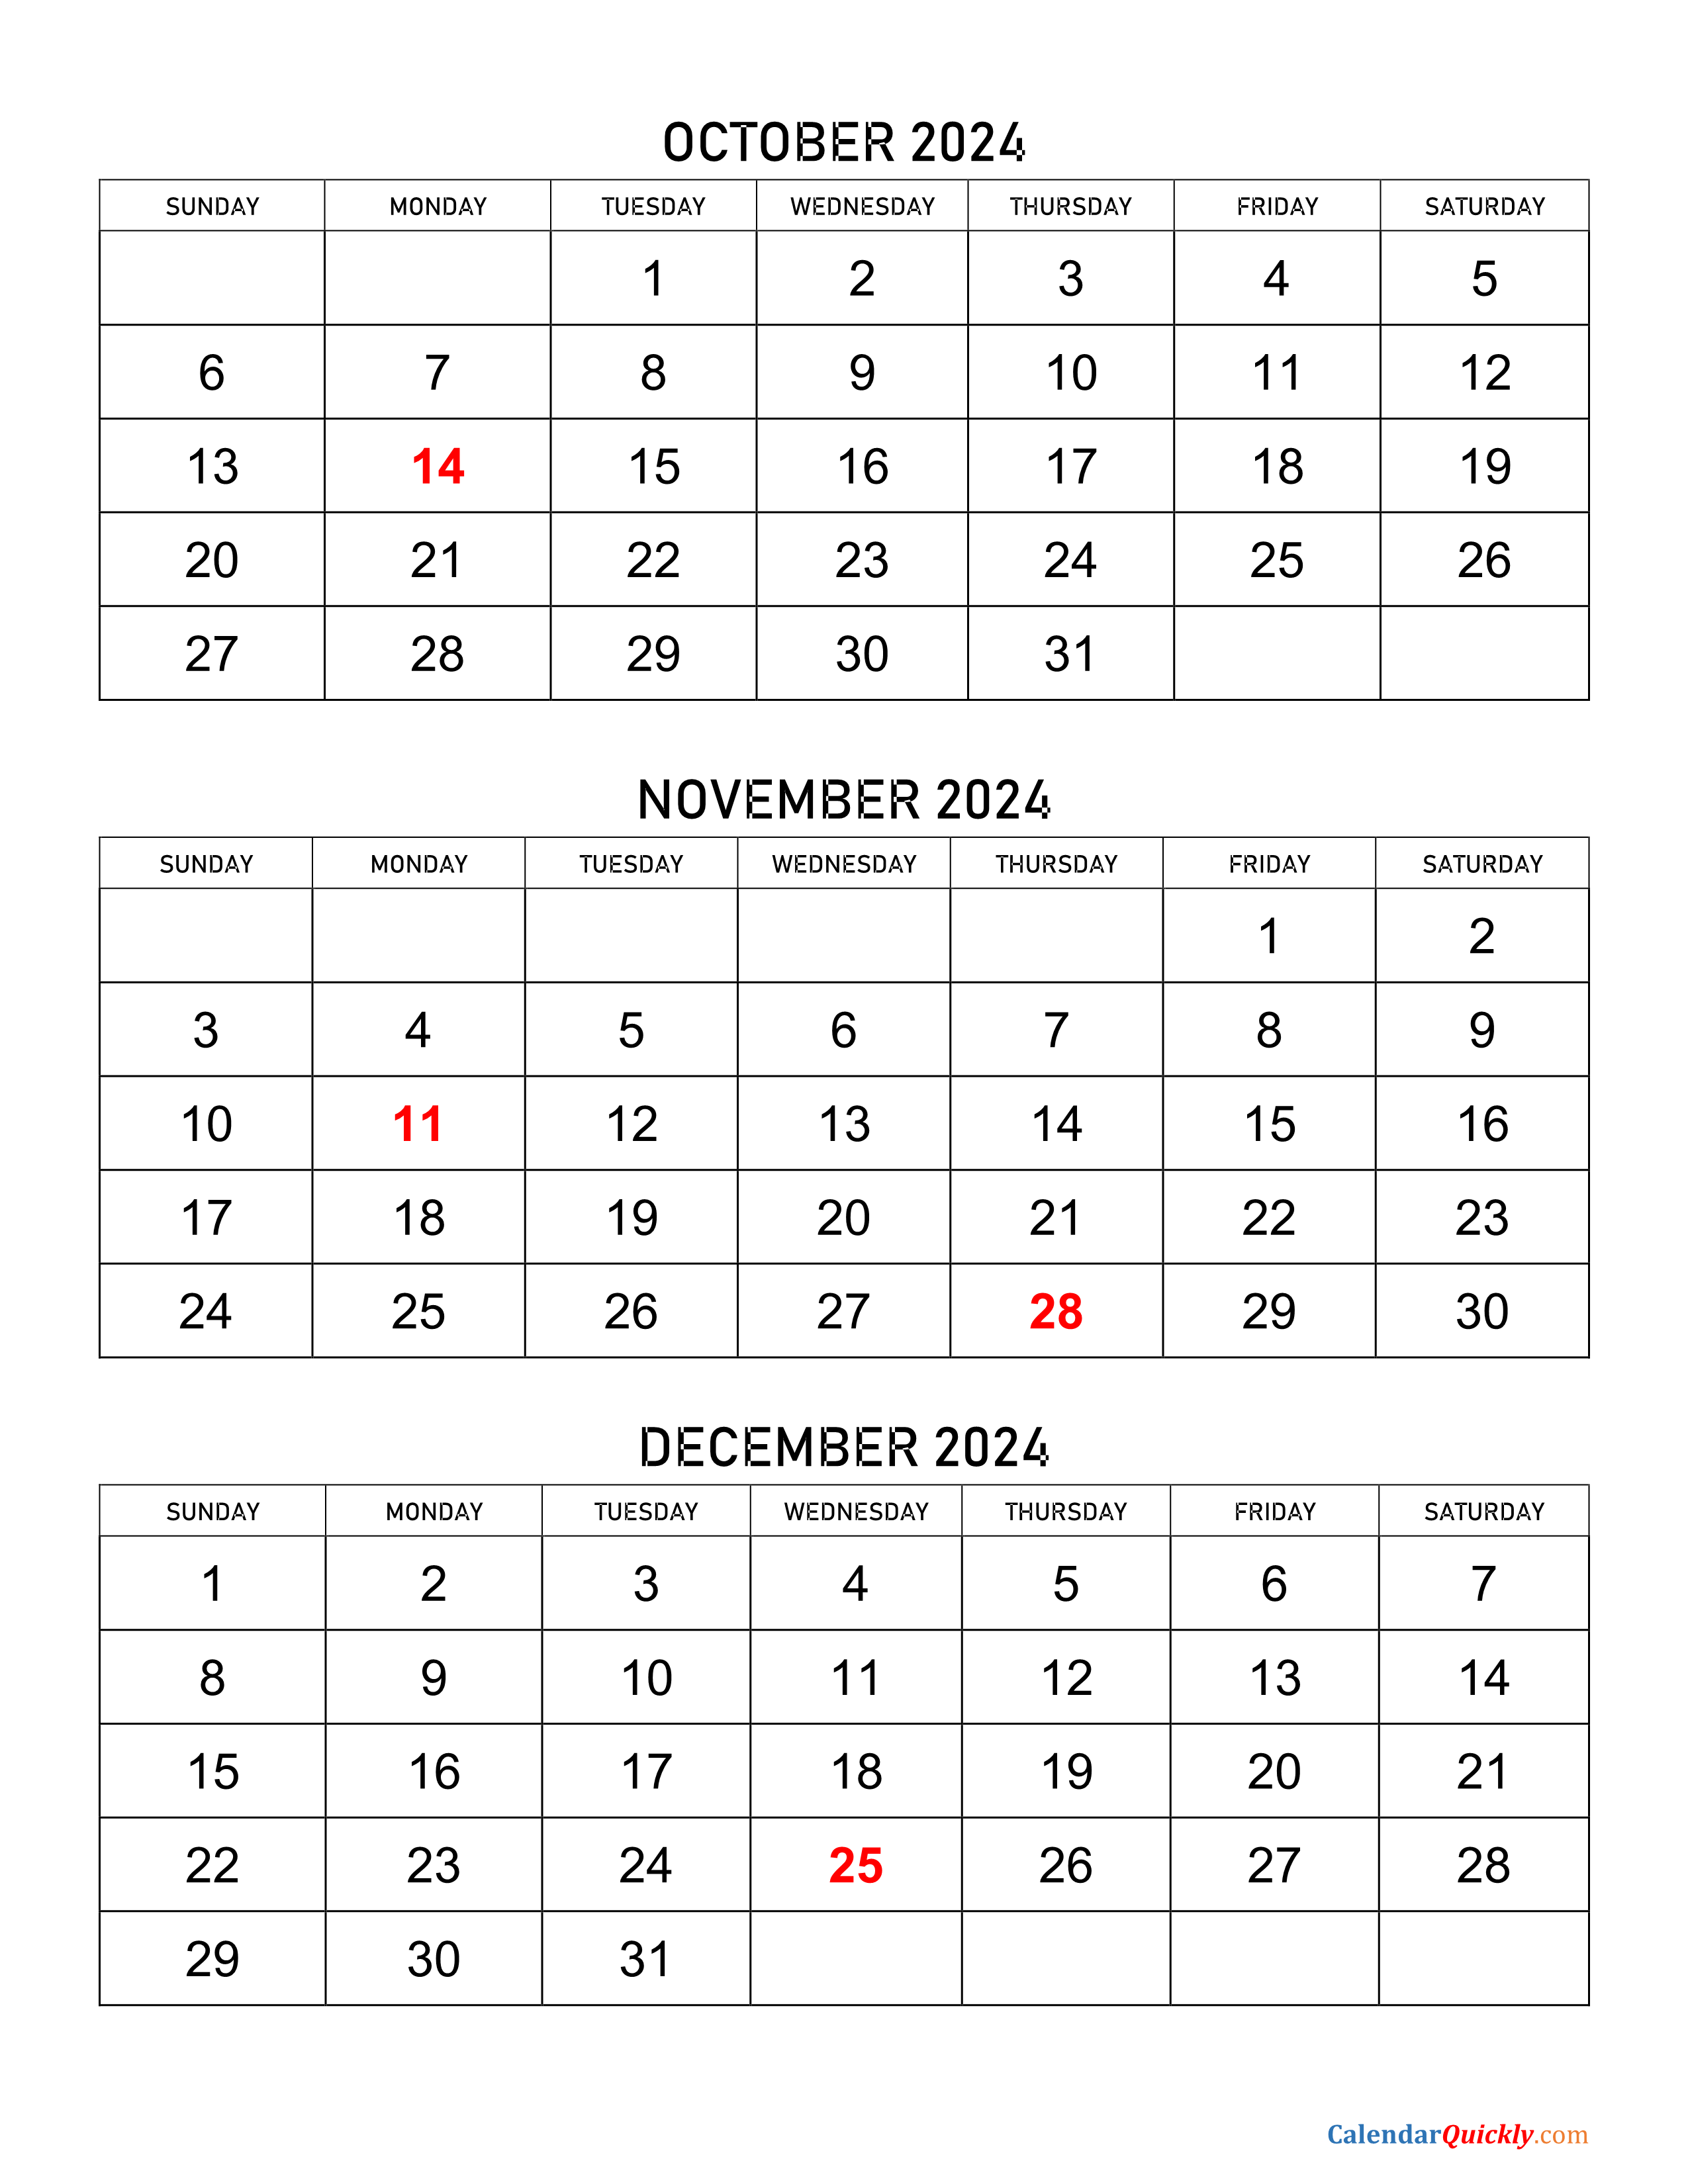 2024 October November December Calendar Printable 2024 CALENDAR PRINTABLE - Free Printable A4 Calendar December 2024